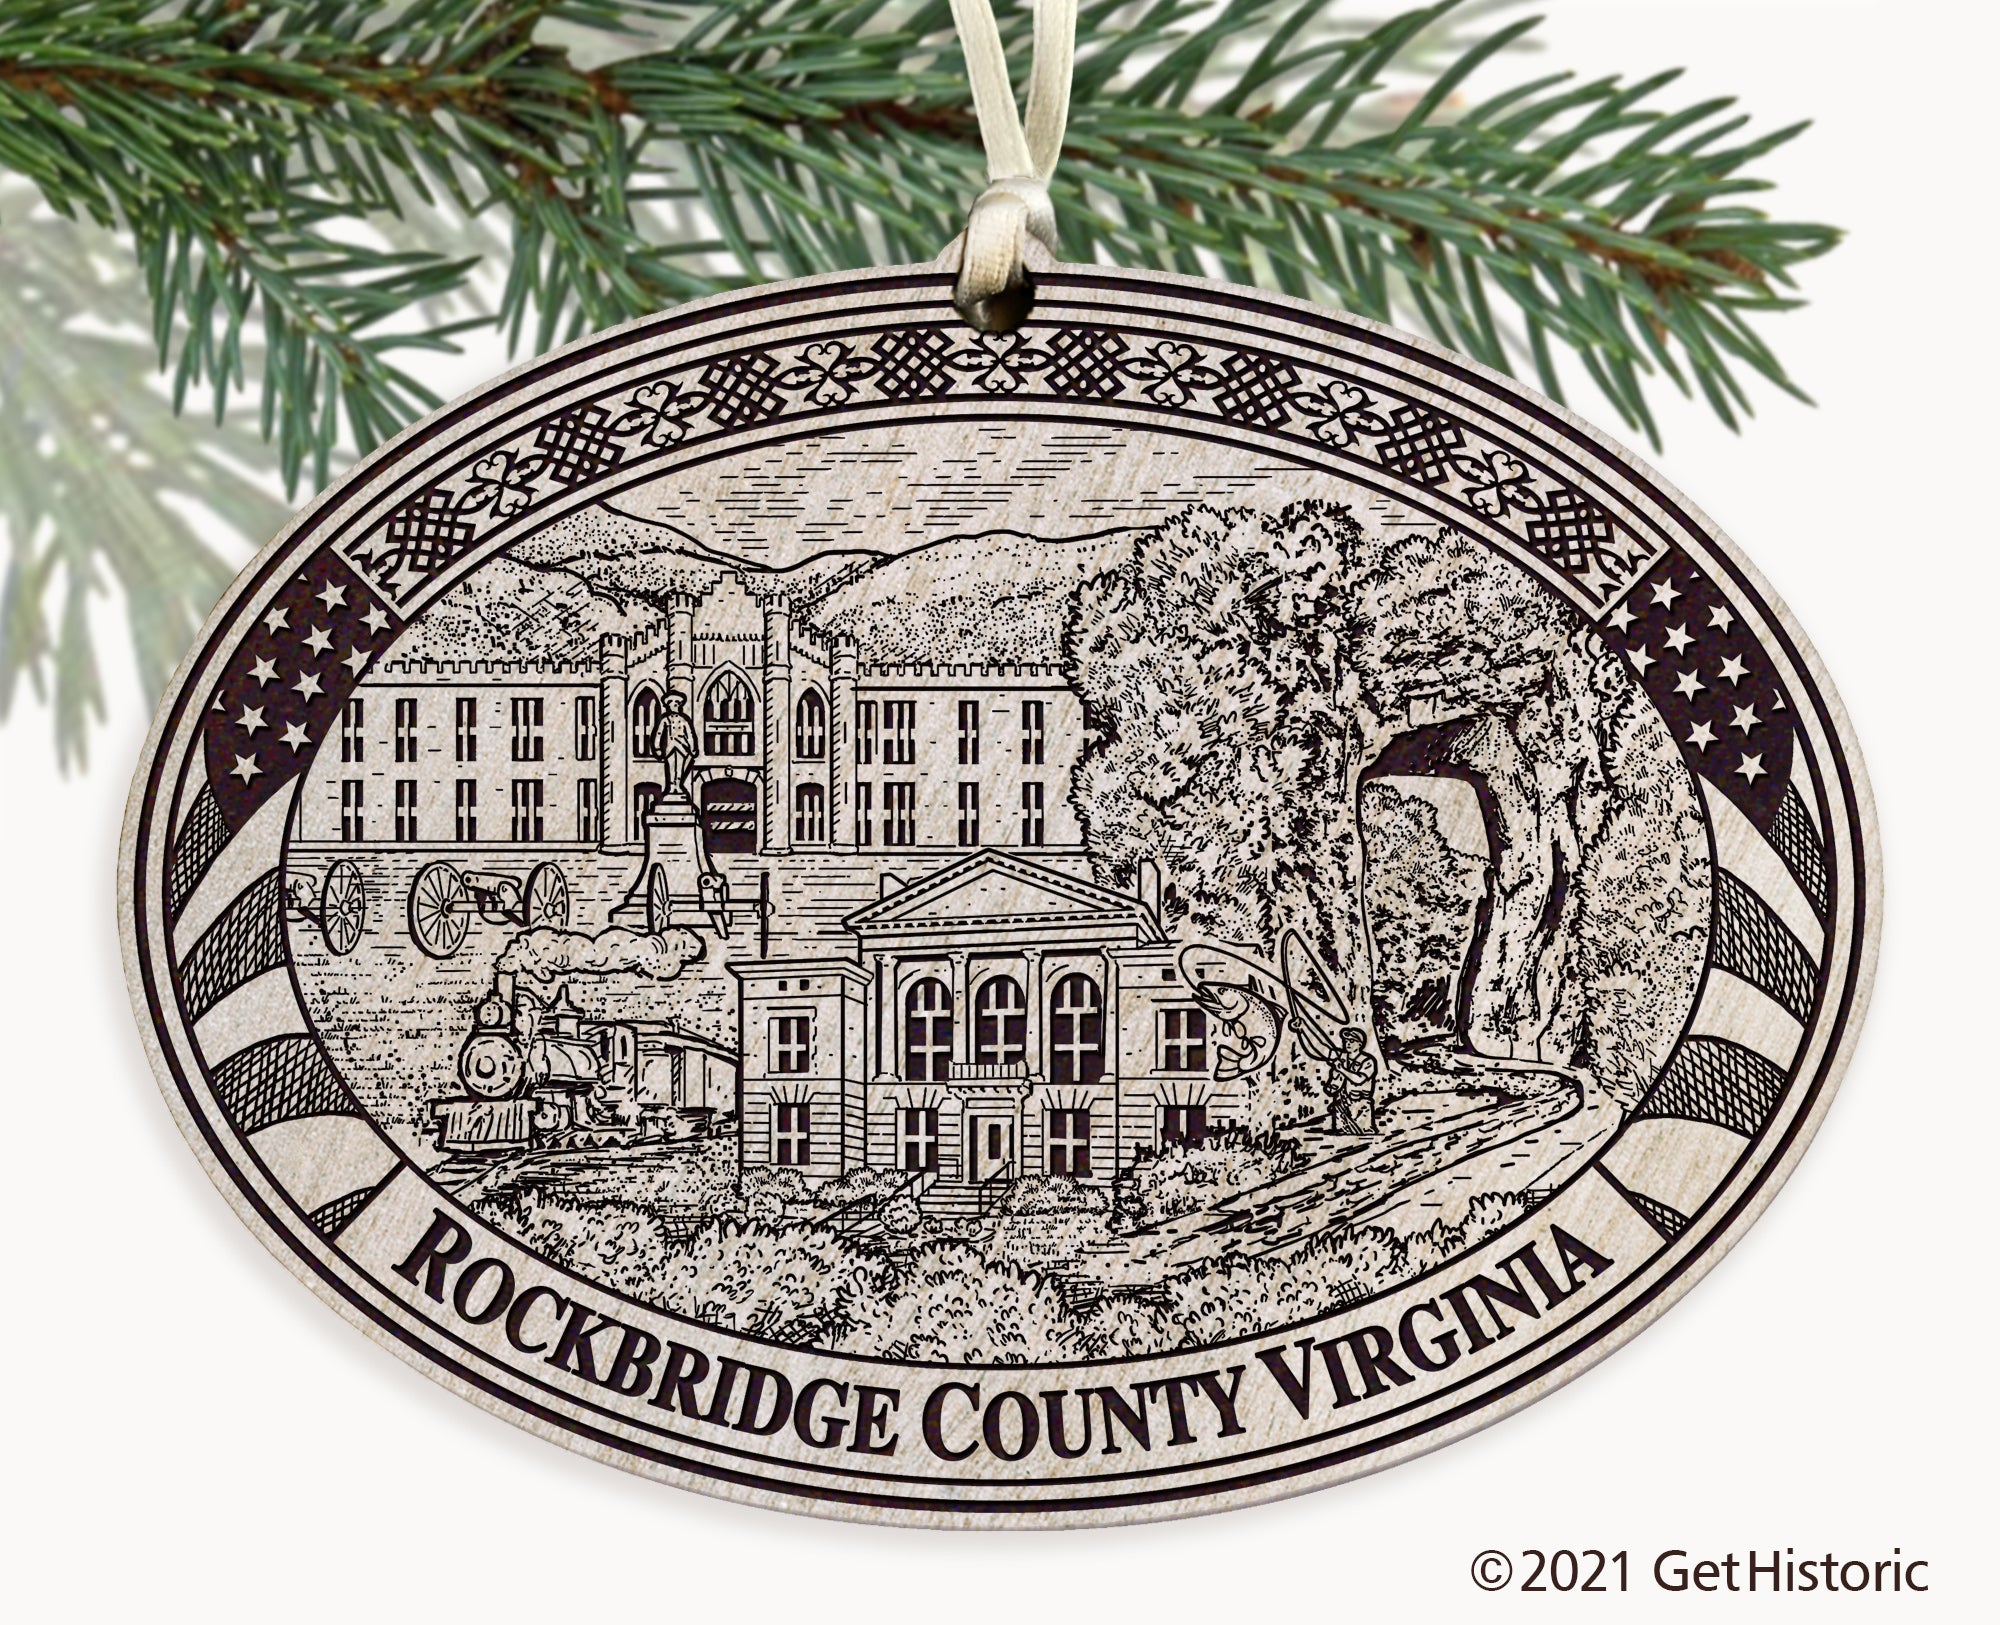 Rockbridge County Virginia Engraved Ornament